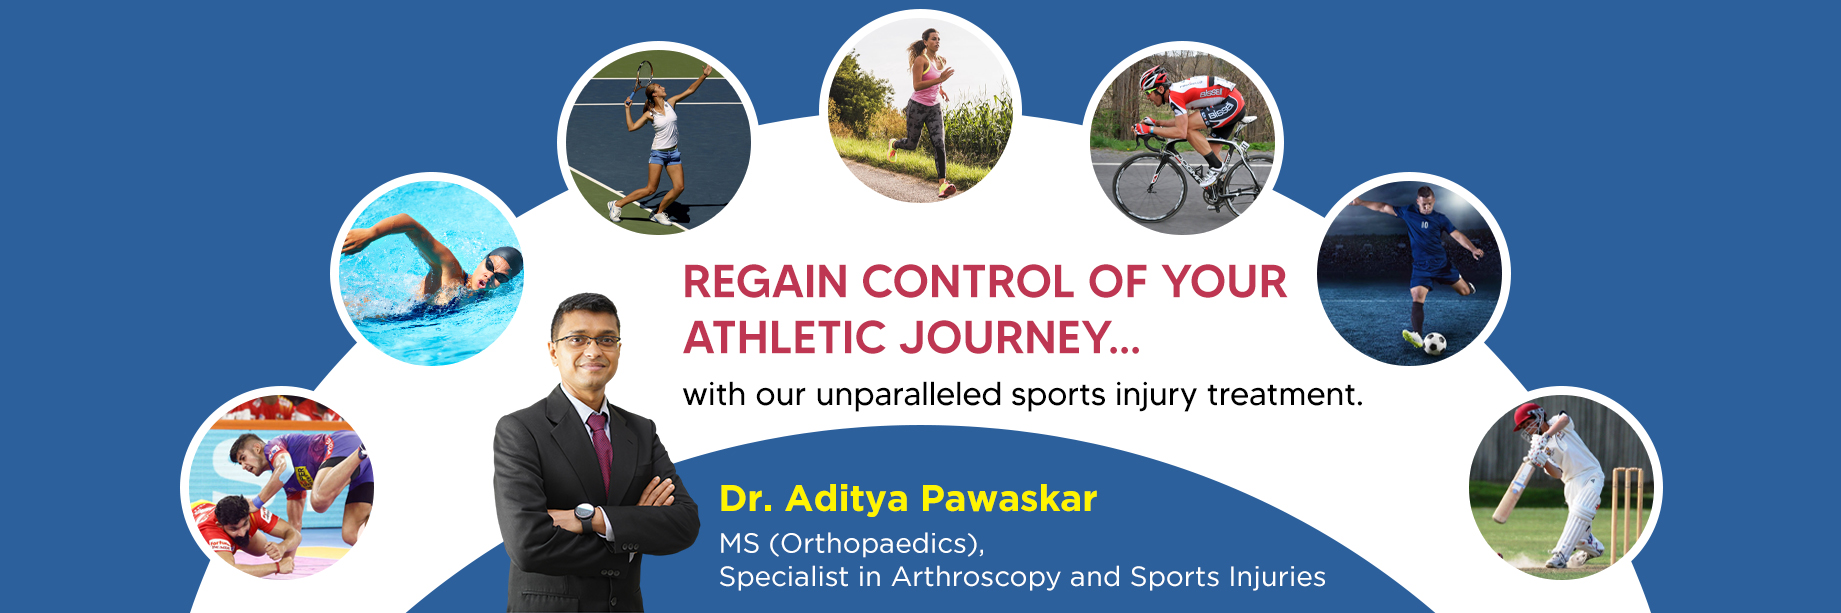 Best Orthopaedic Surgeon, Dr. Aditya Pawaskar, Specialist in Arthroscopy and Sport Injury in Mumbai, Maharshtra in Matunga and Tardeo Road.